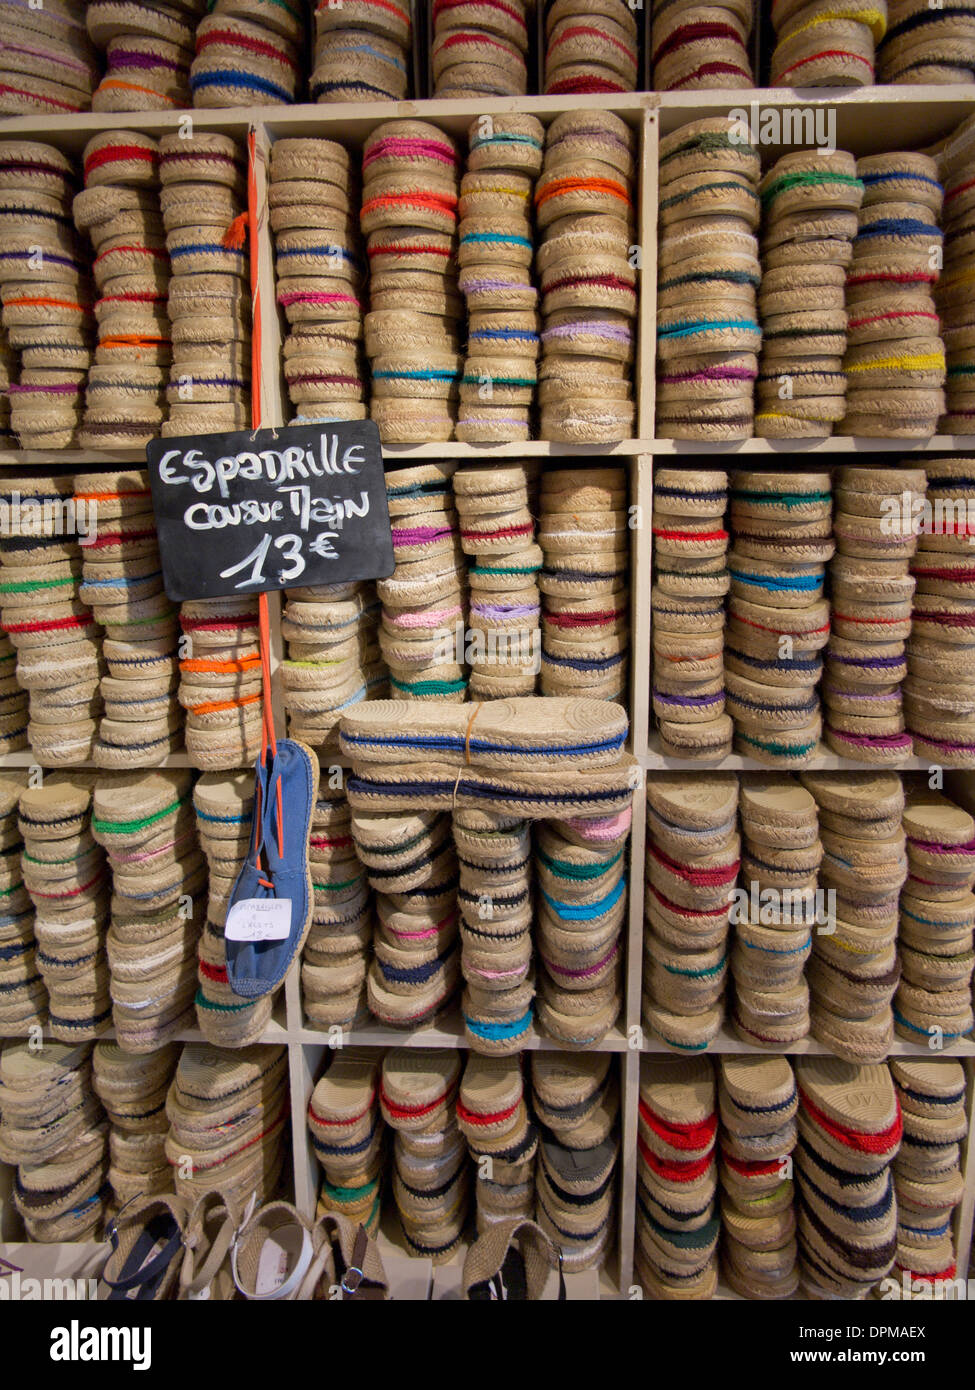 Espadrilles for sale inside a shop in St Jean de Luz, Pays Basque (Basque  Country), south west France Stock Photo - Alamy